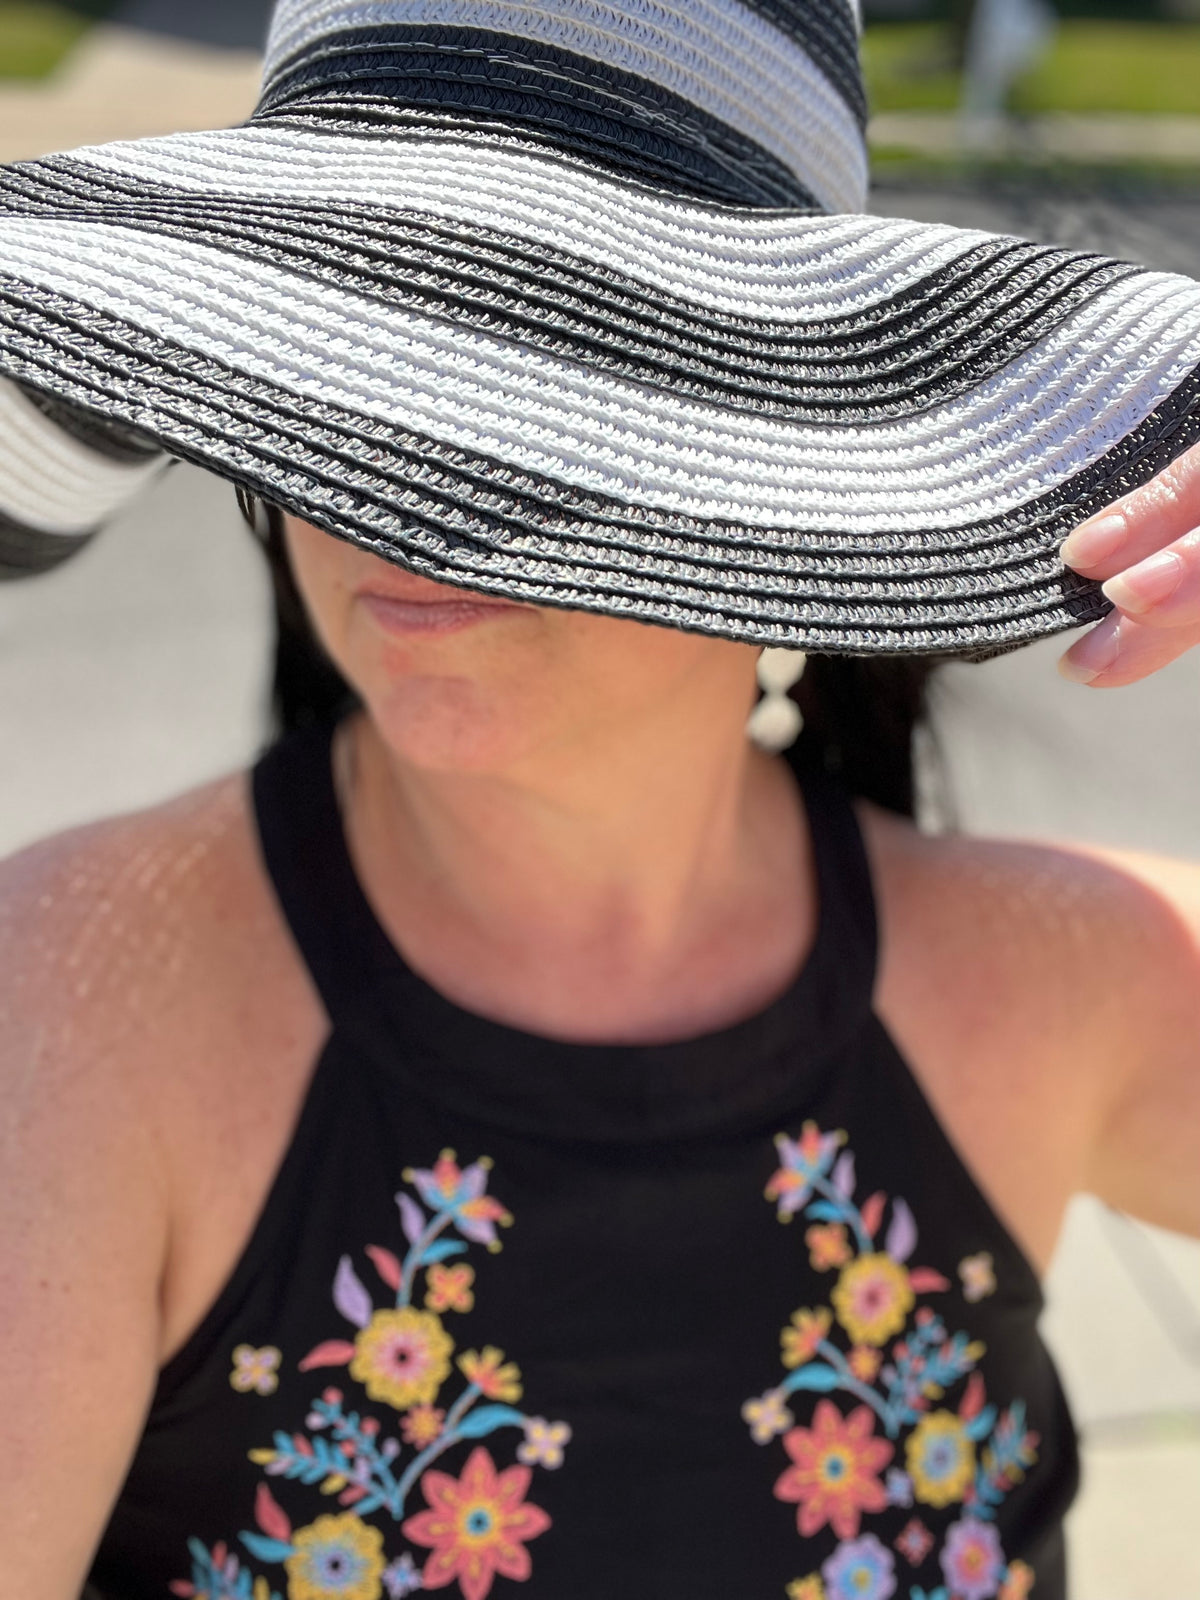 Striped Beach Hat |2 colors|